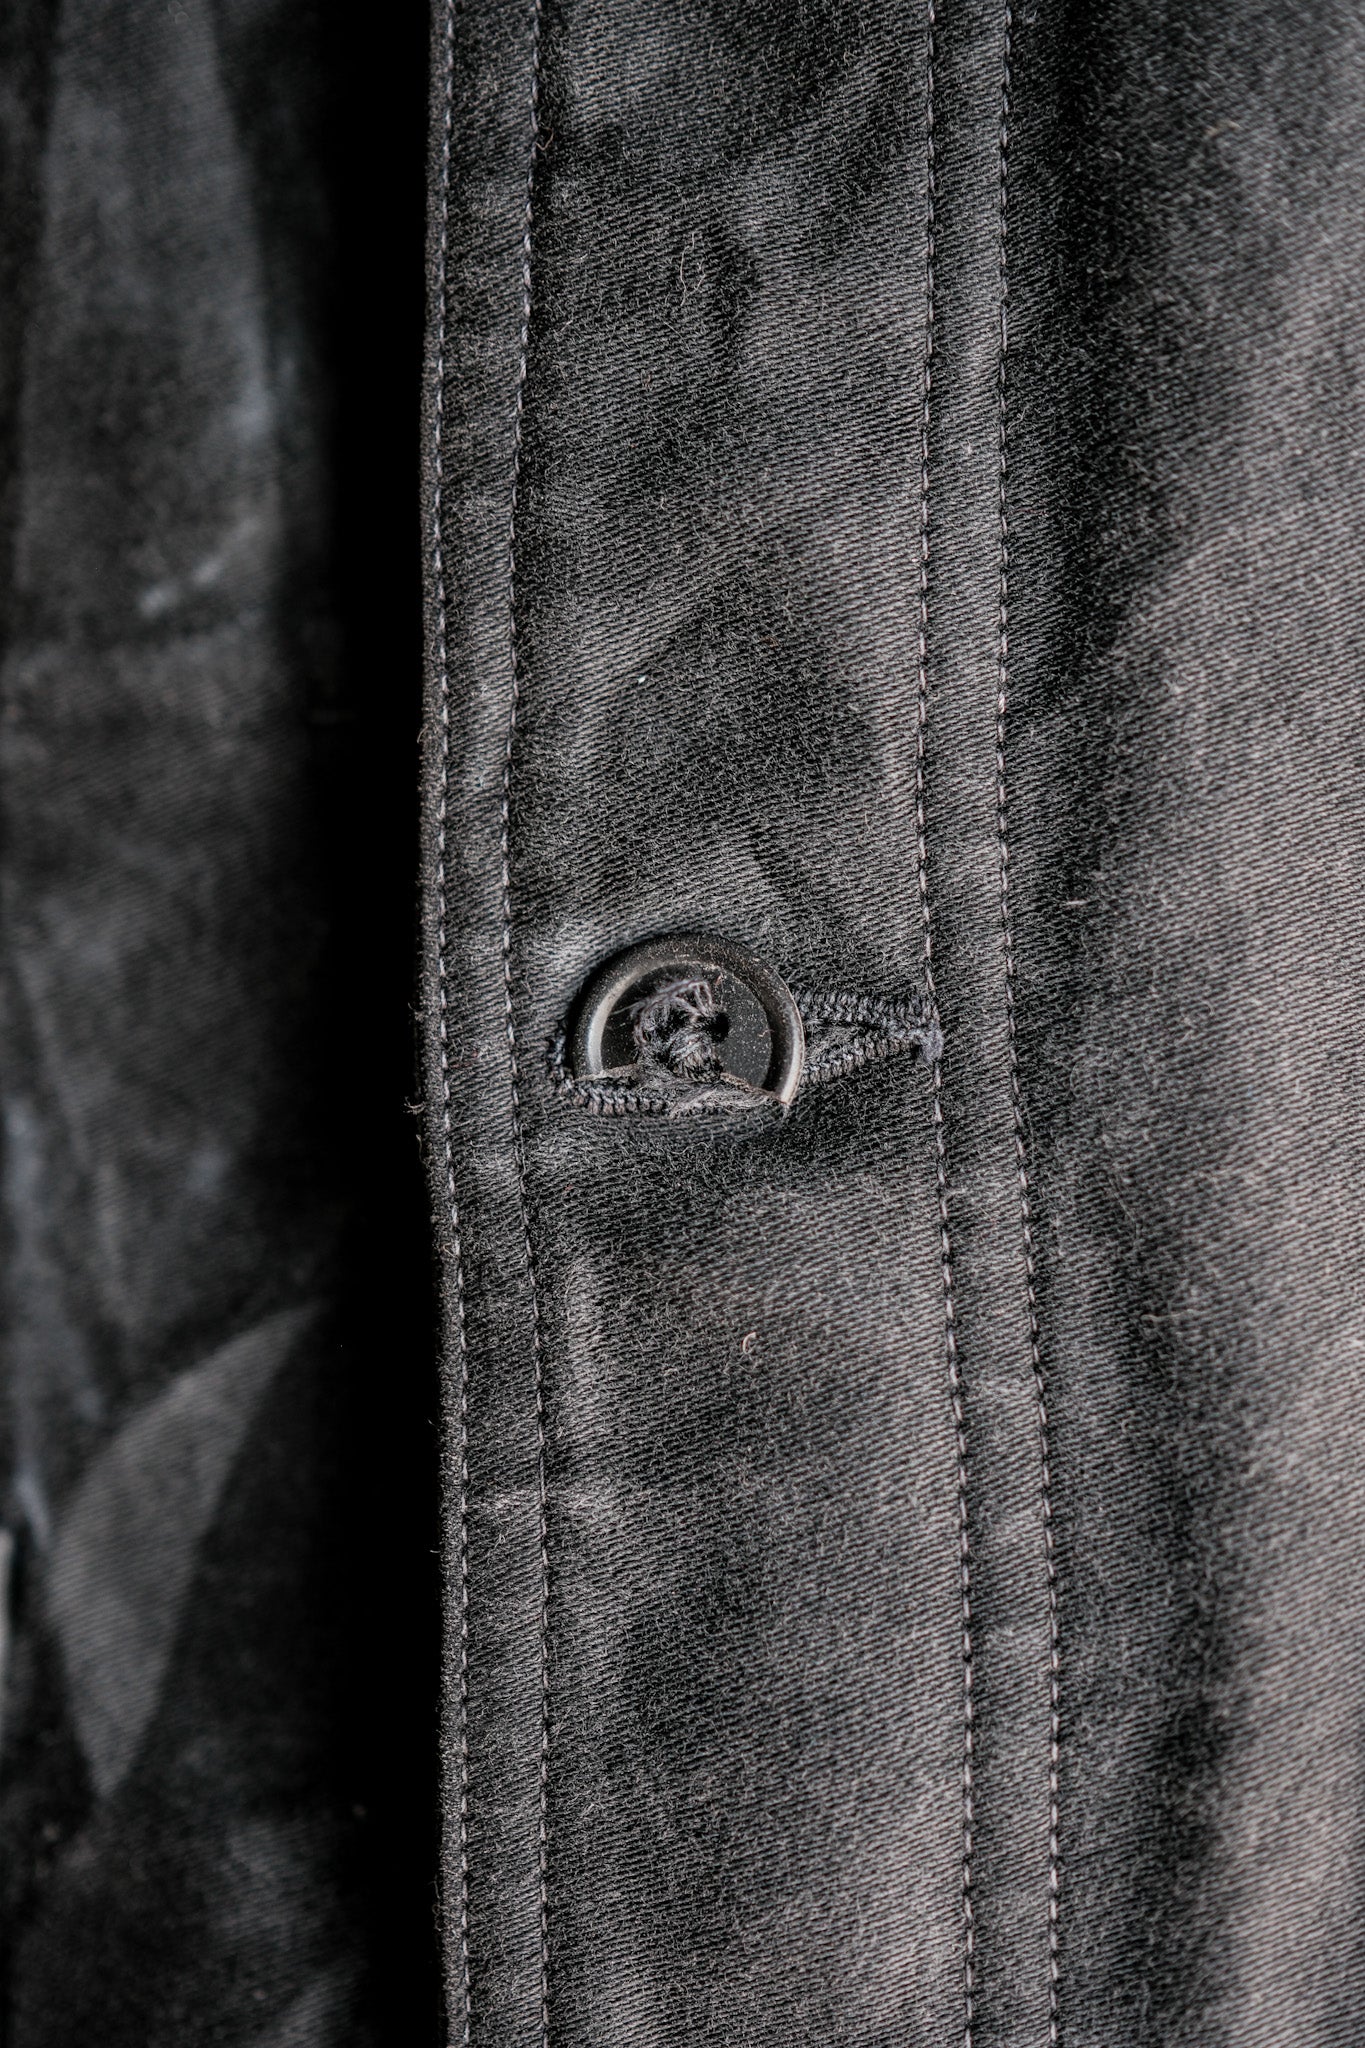 [~ 30's] French Vintage Black Moleskin Work Jacket "6 Buttons"